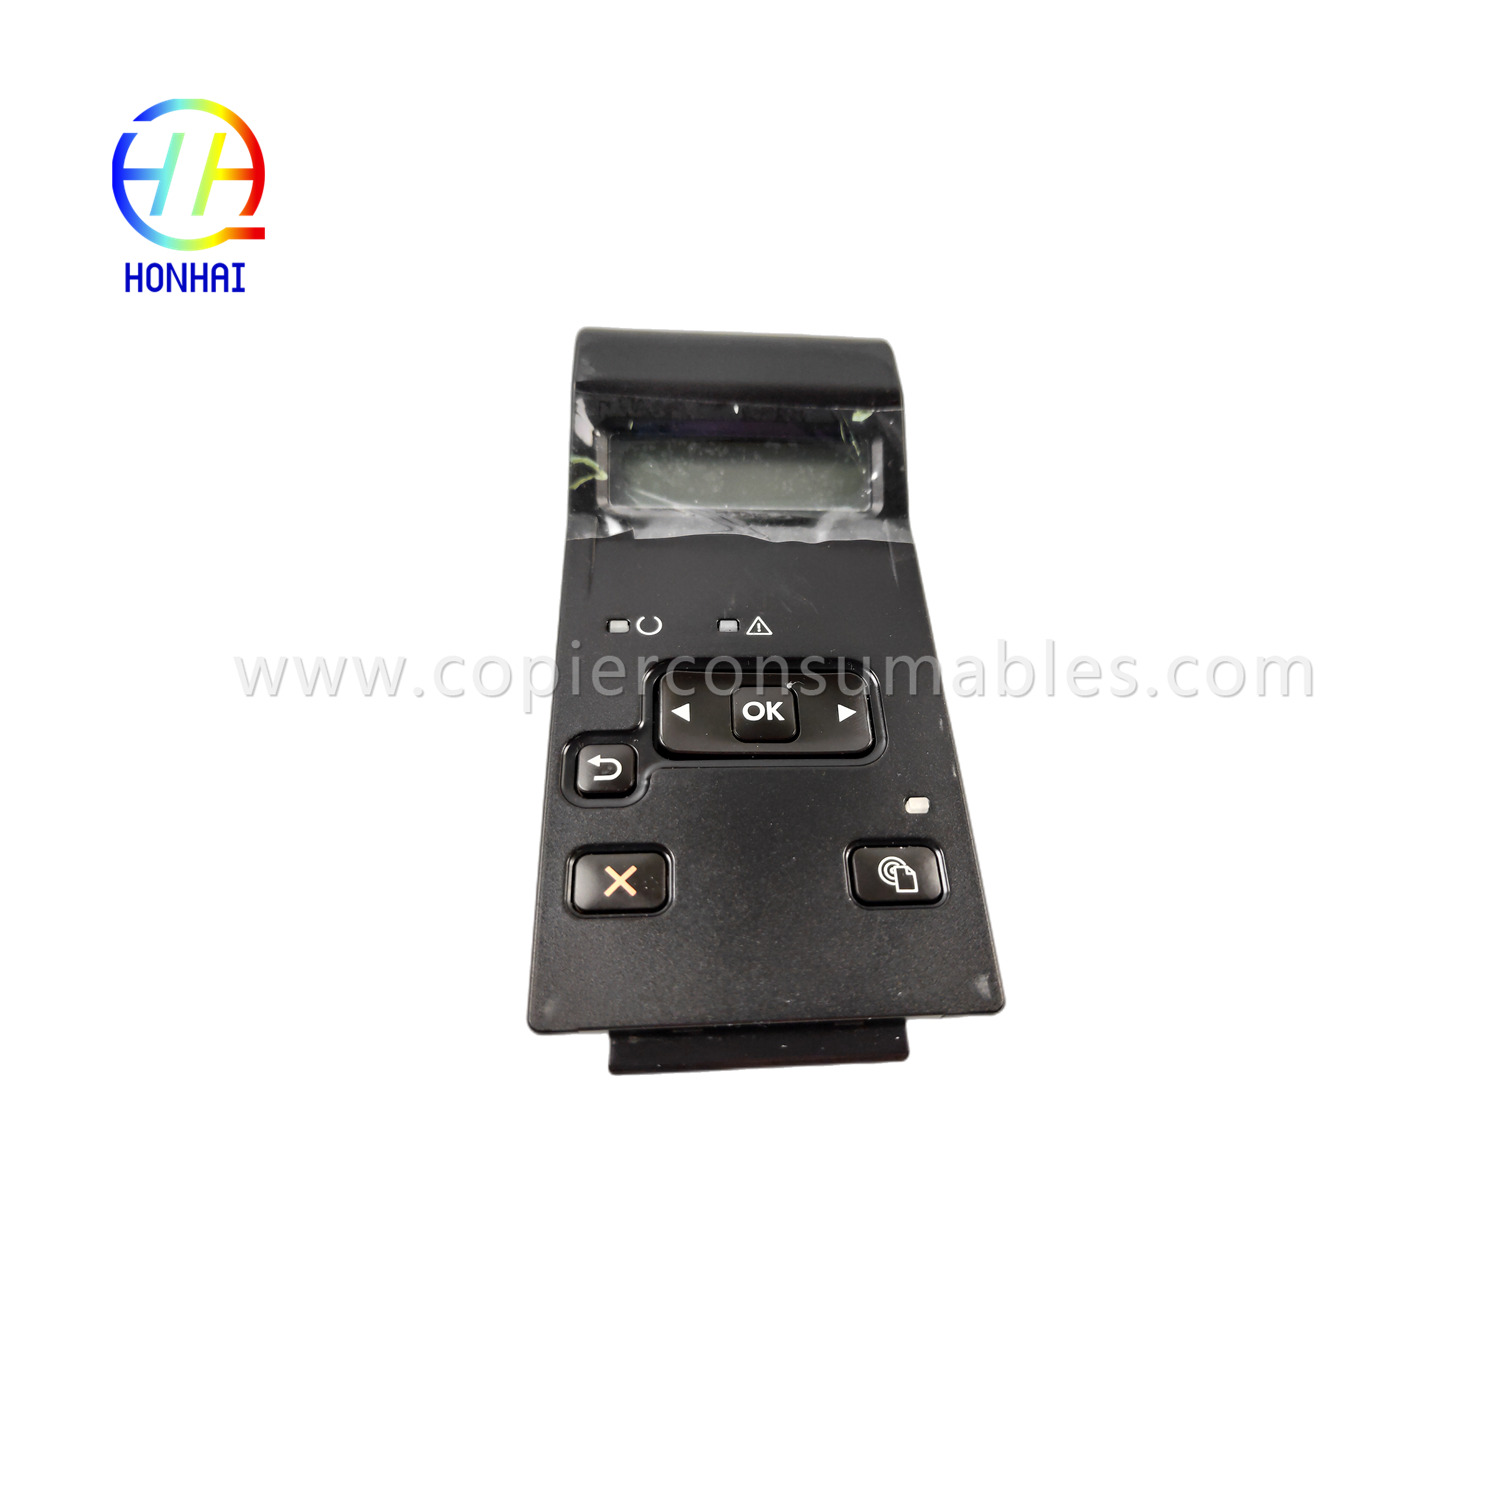 Panel de control pantalla táctil para HP LaserJet 400 M401d M401dn M401n M401 m401 401d 401dn 401n (1)